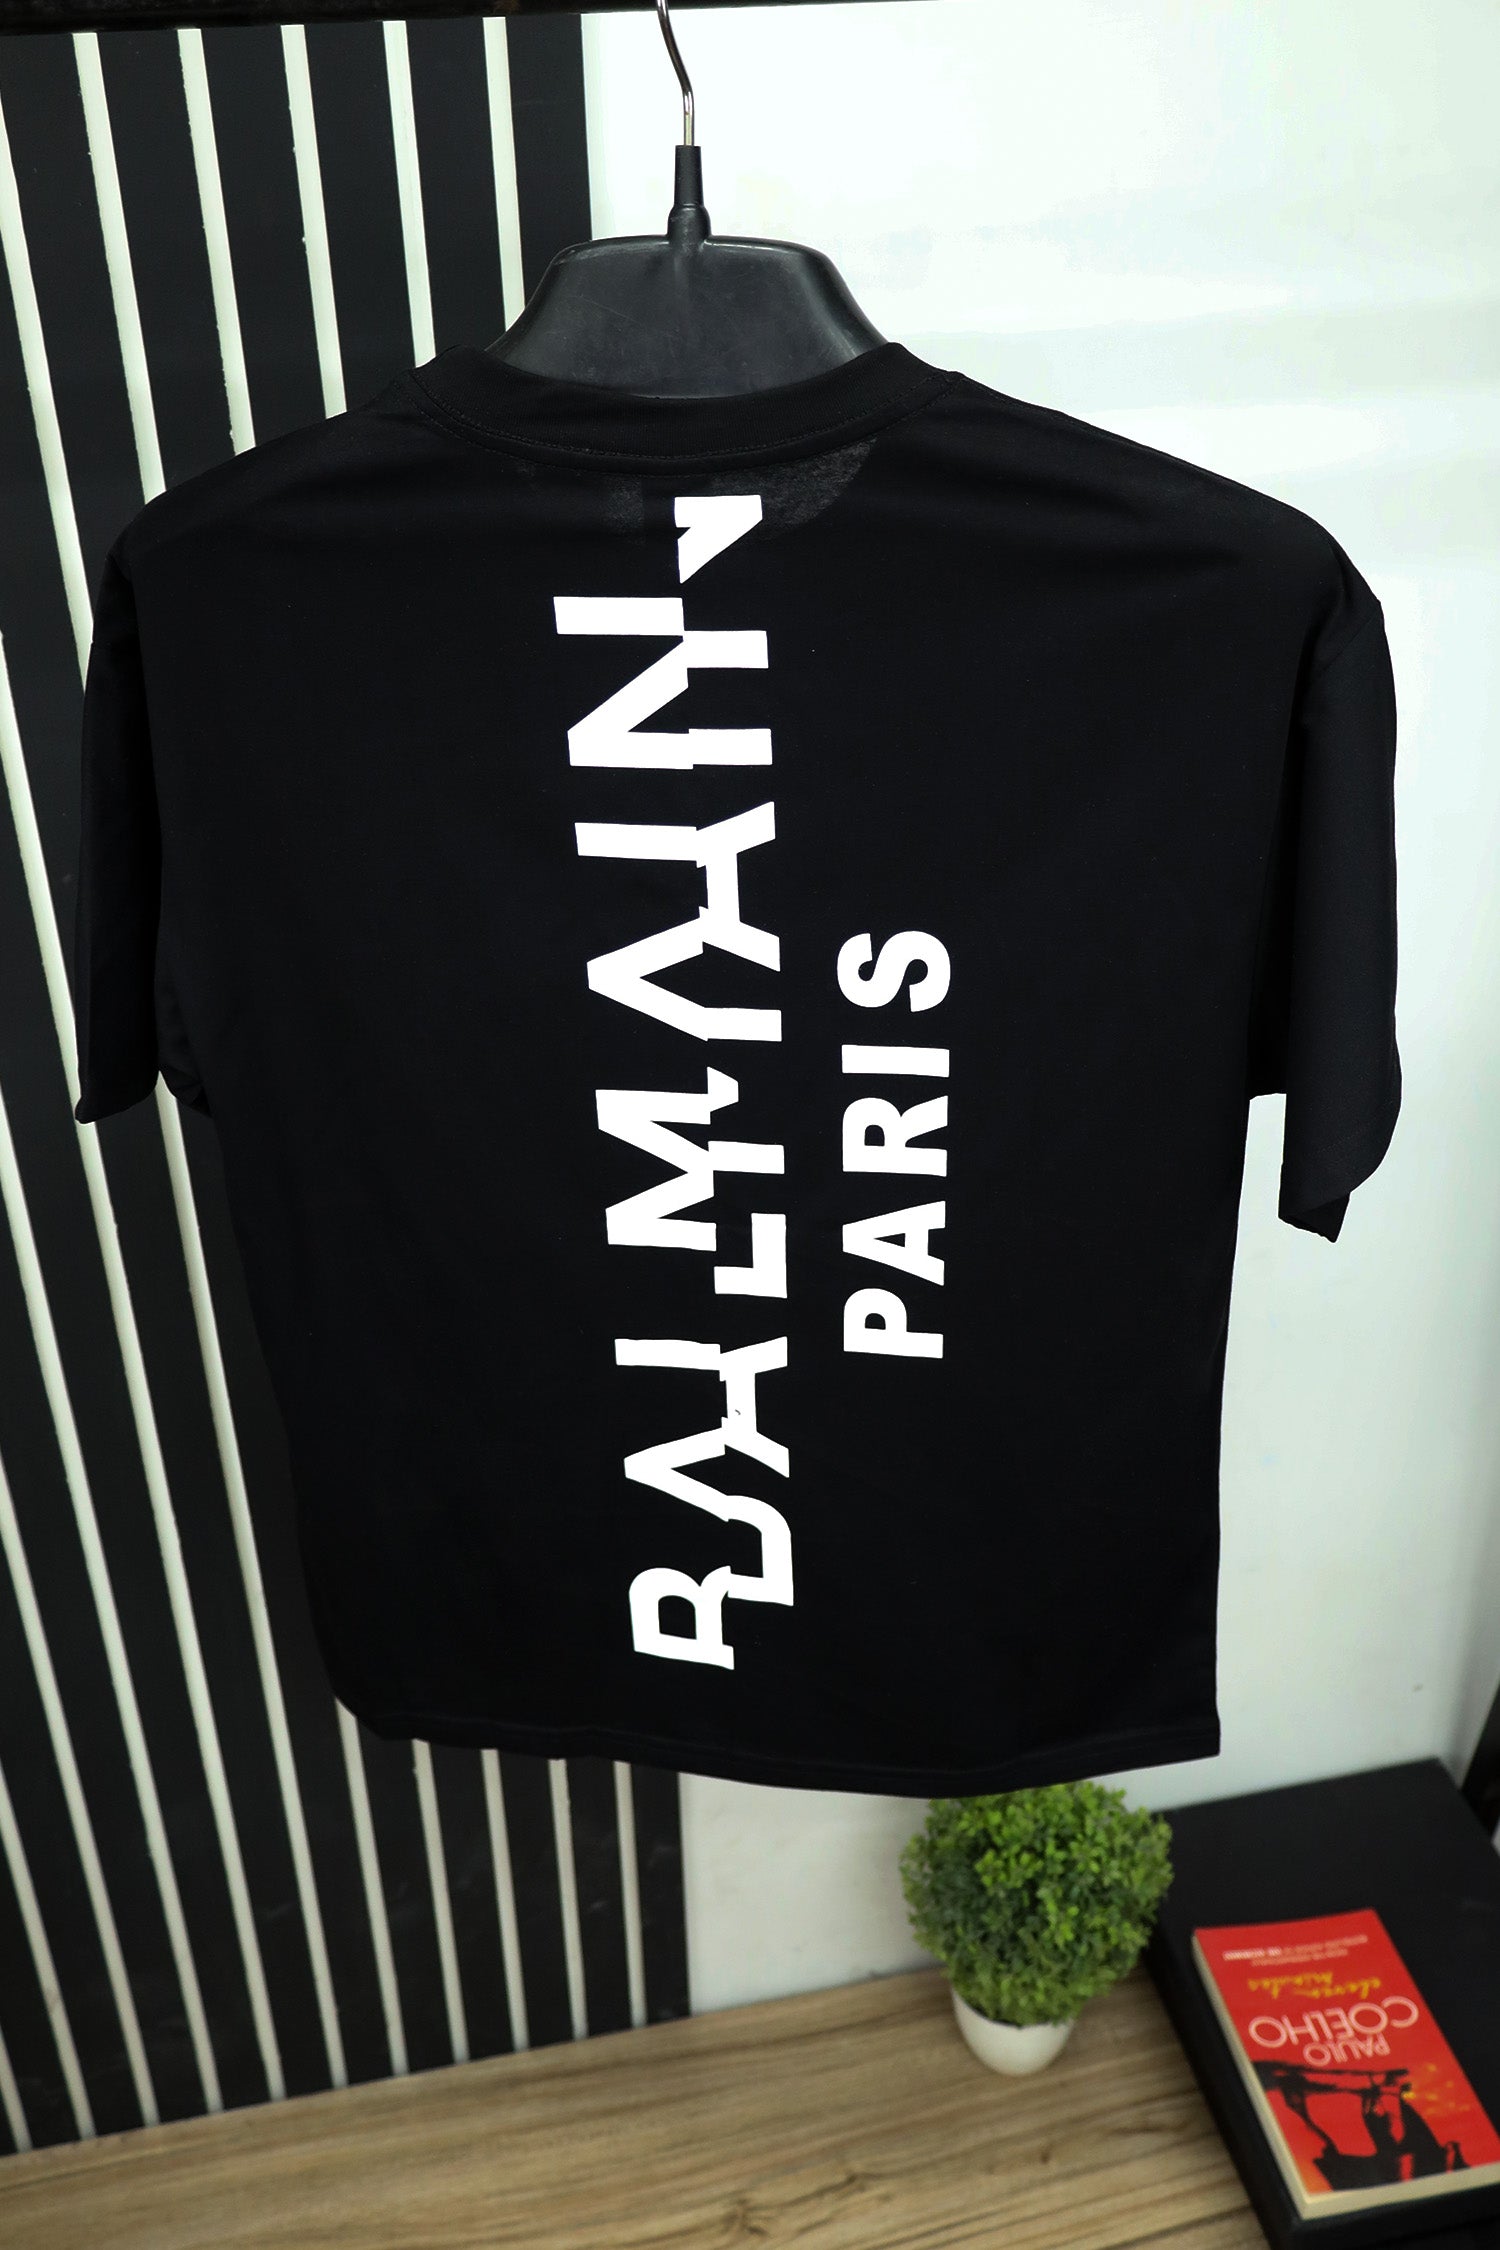 Blmain Front Slogan Oversized T-Shirt